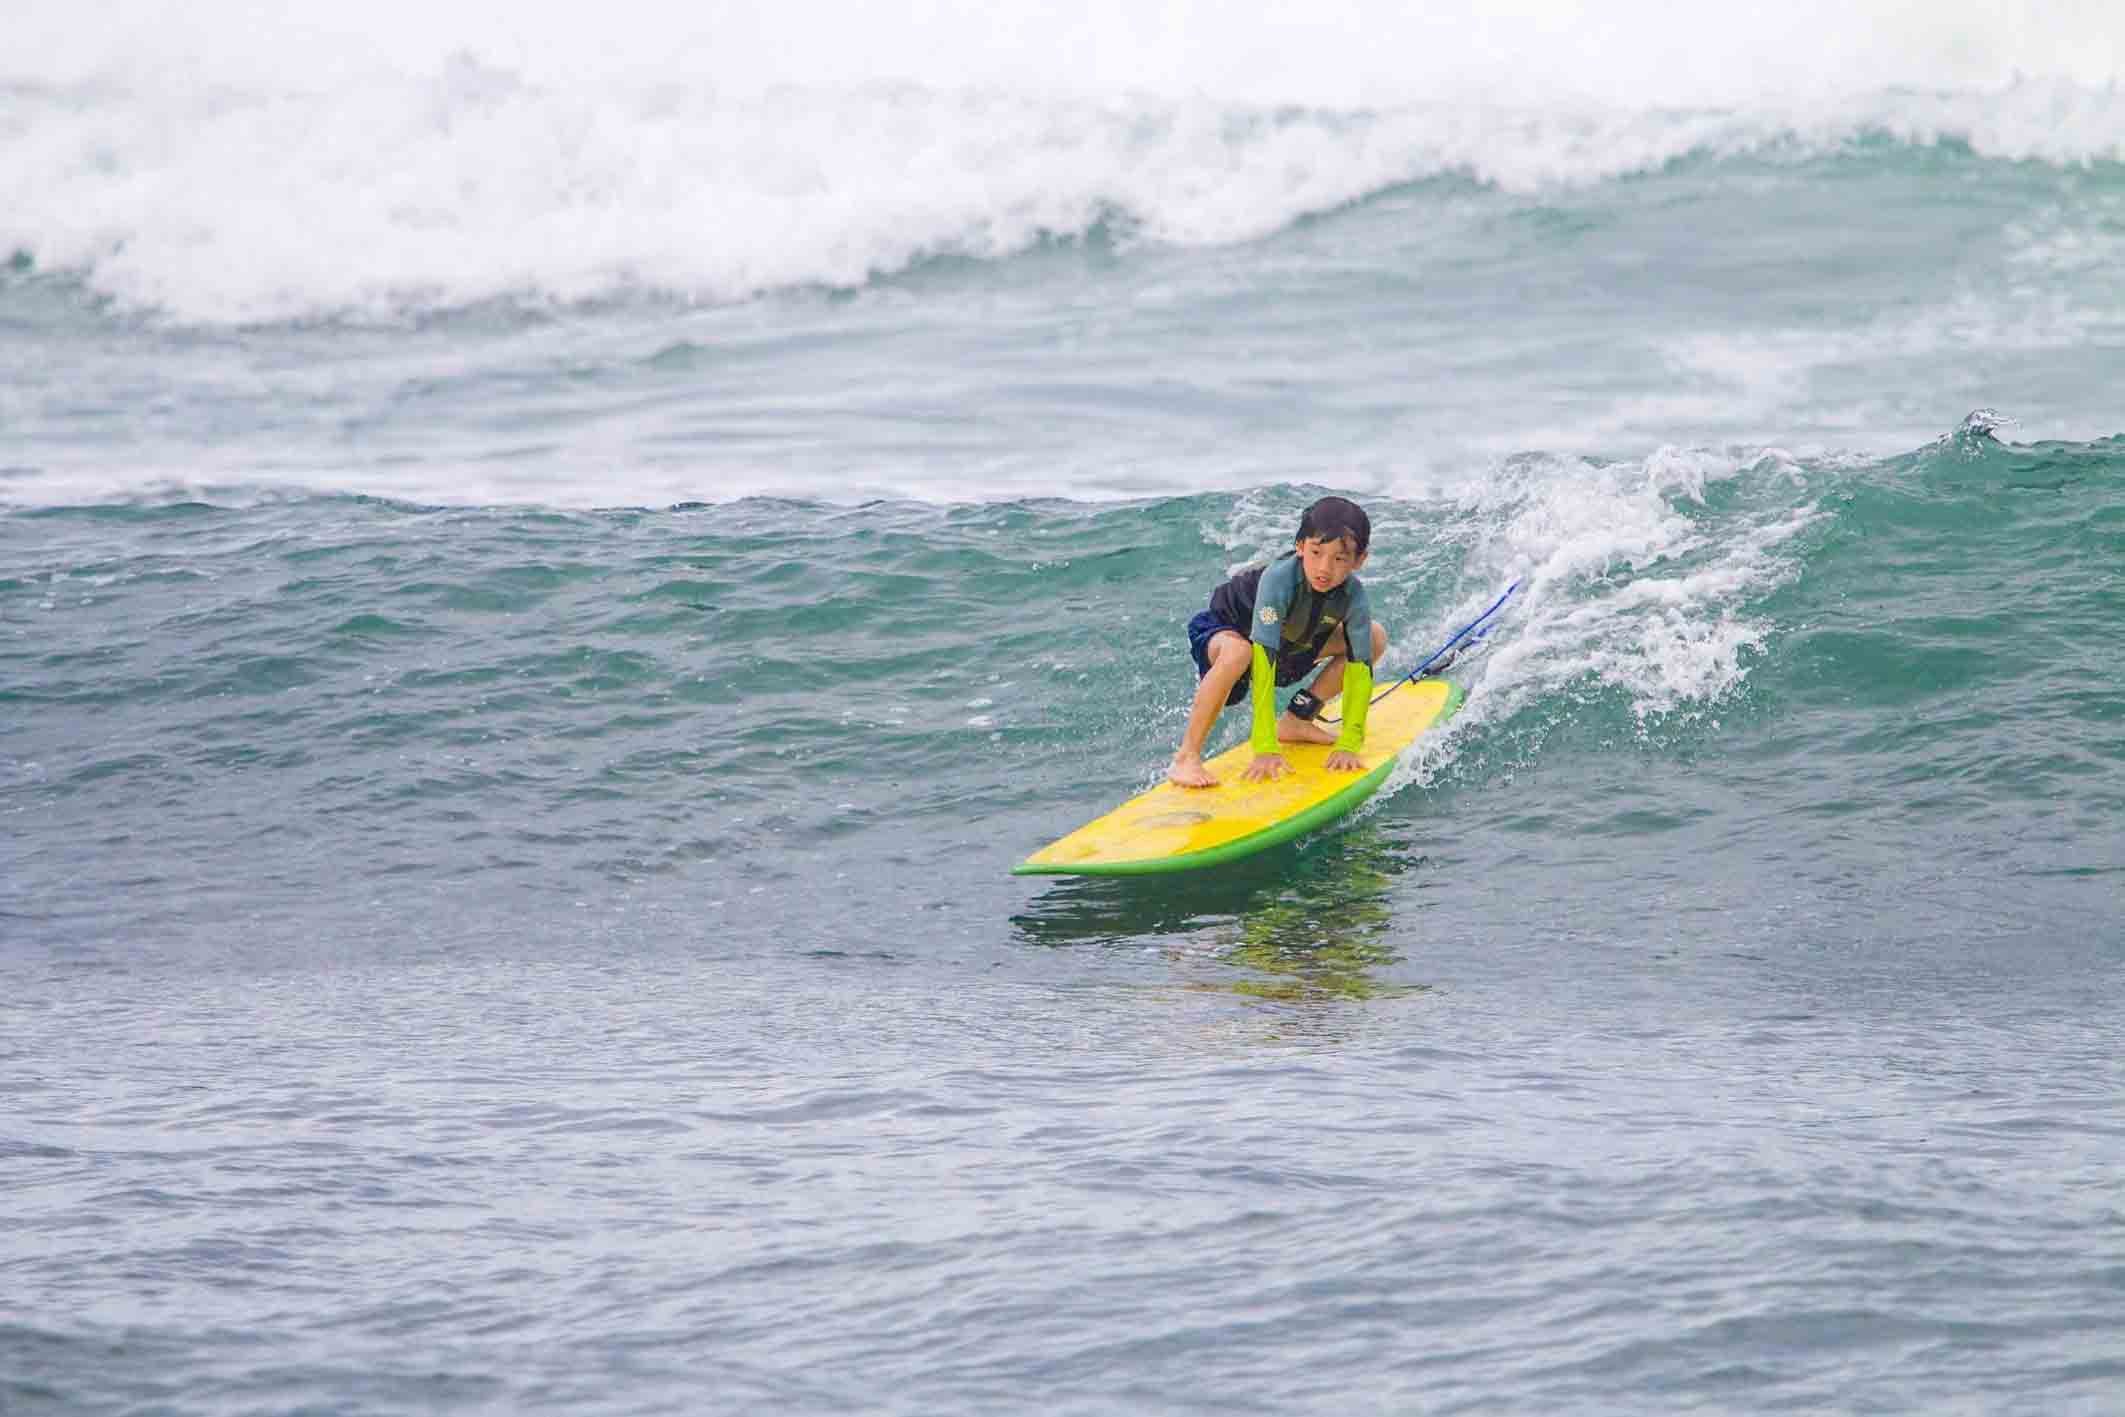 beginner surfer